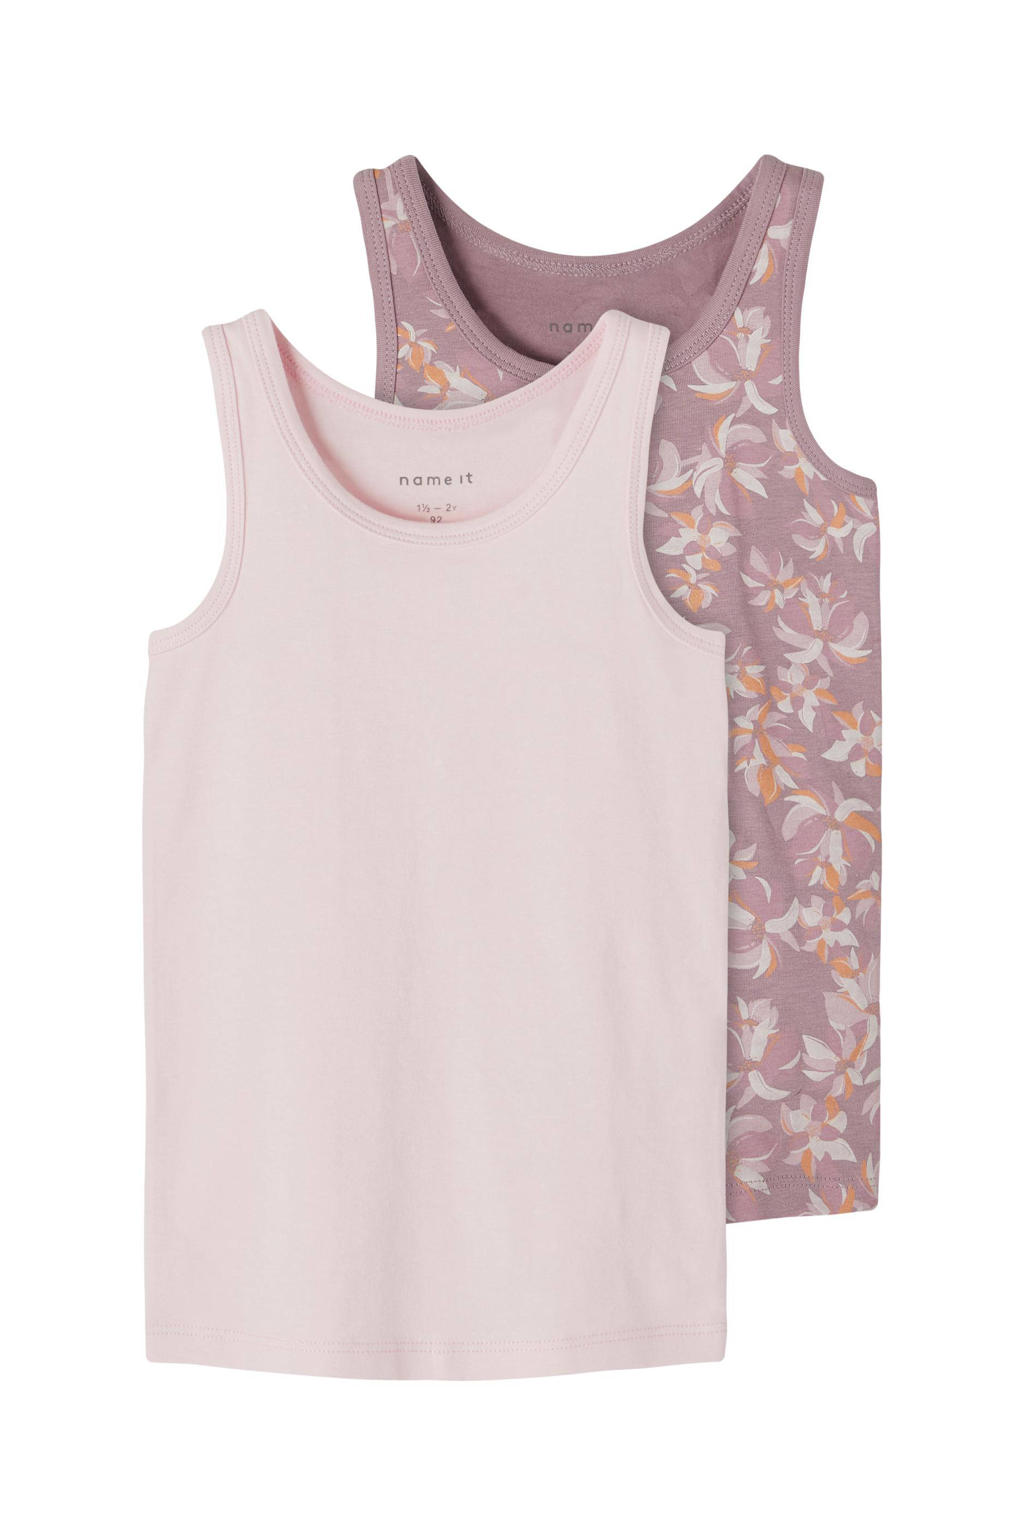 NAME IT MINI hemd - set van 2 paars/roze